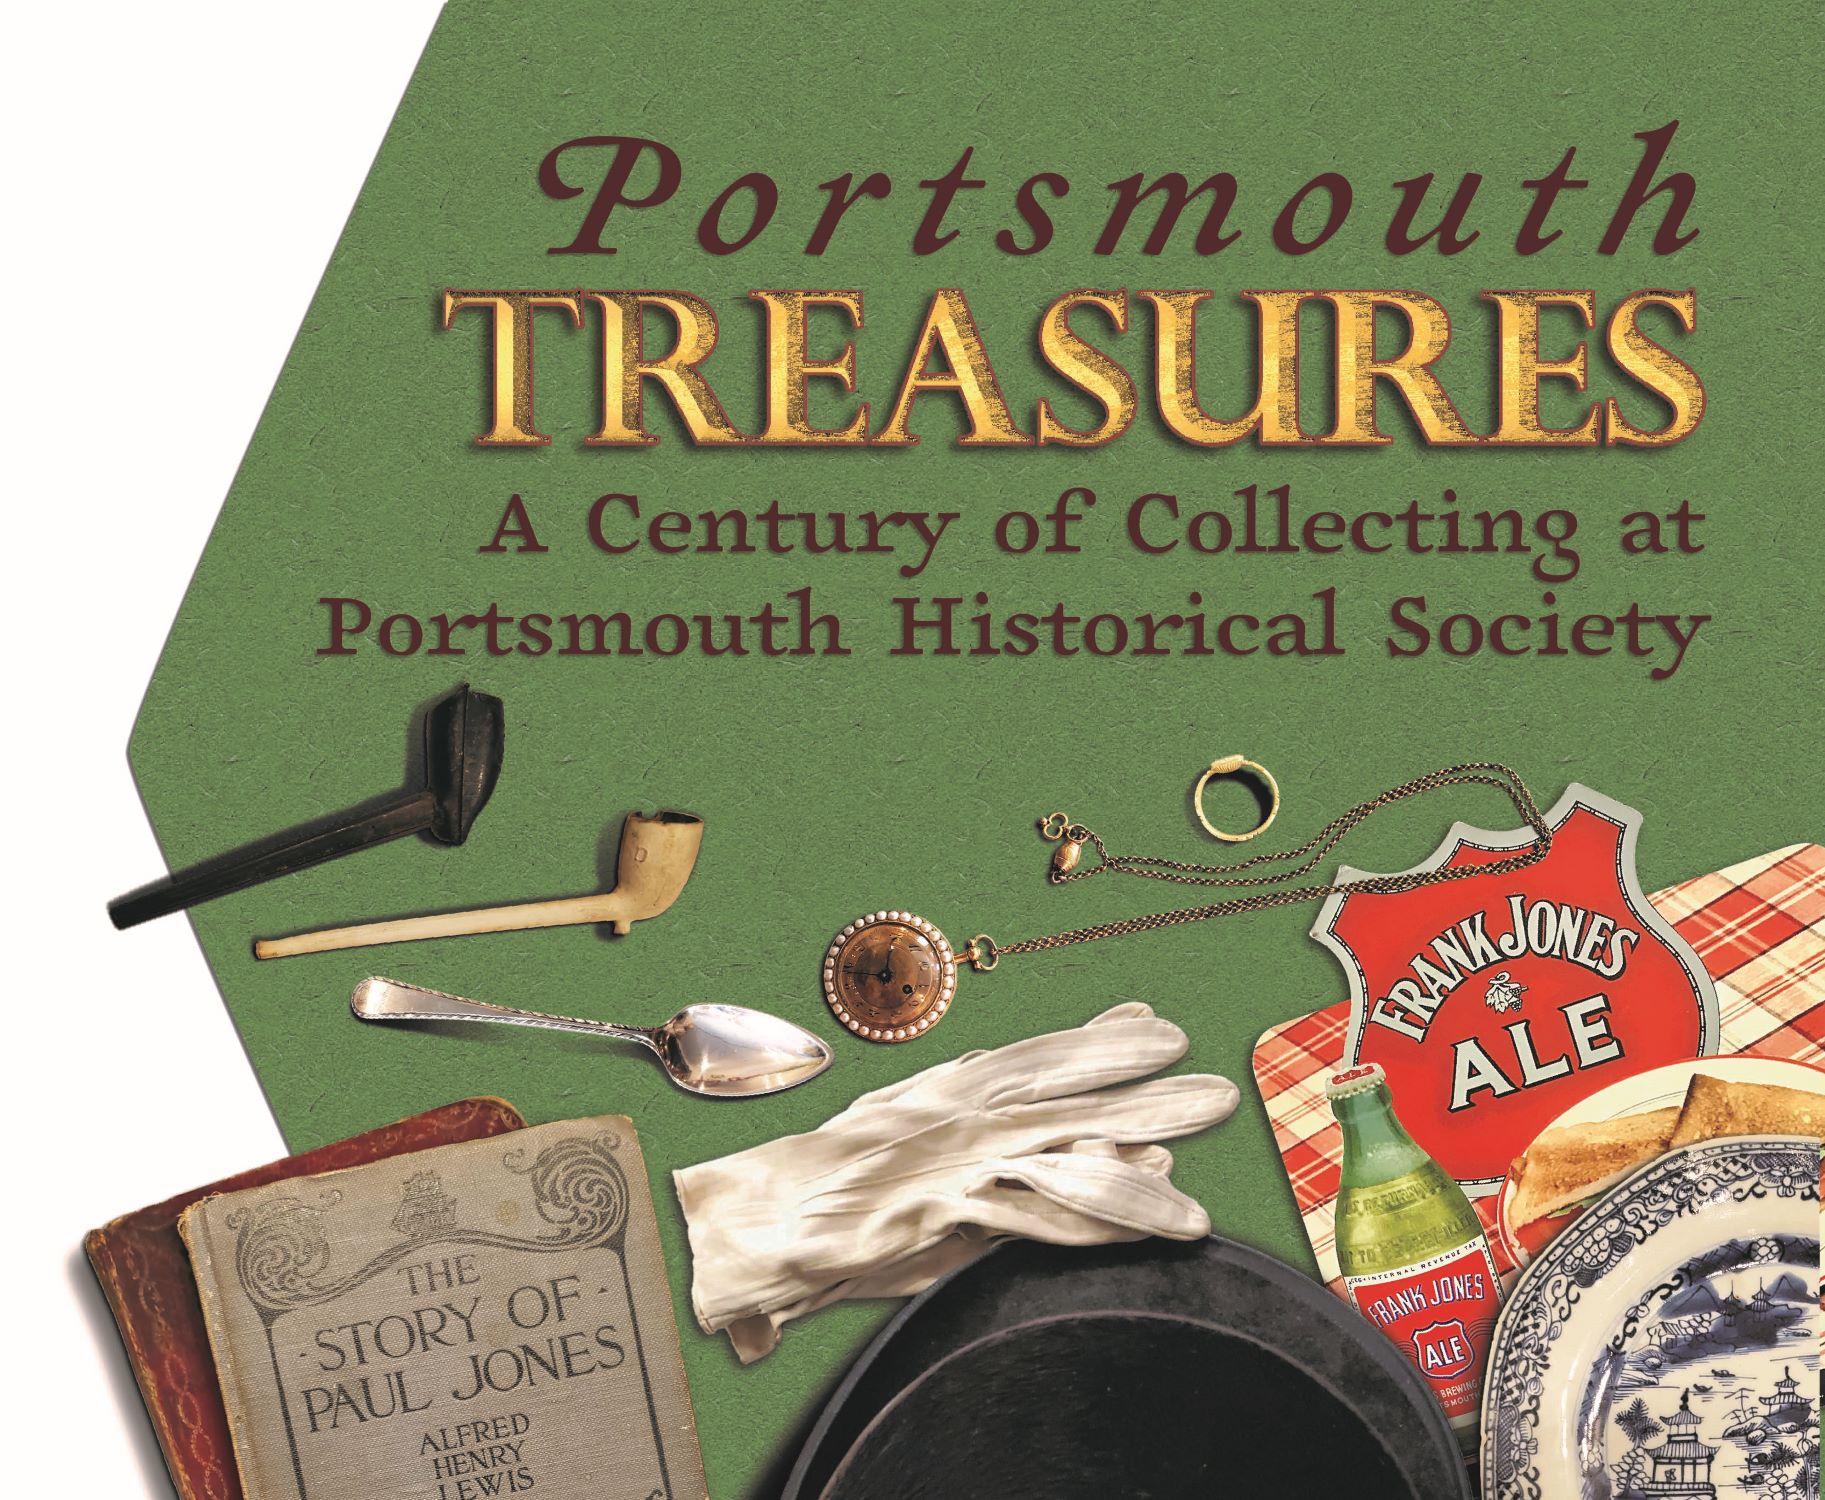 “Portsmouth Treasures” Exhibition Celebrating 100 Years of Saving History at the John Paul Jones House